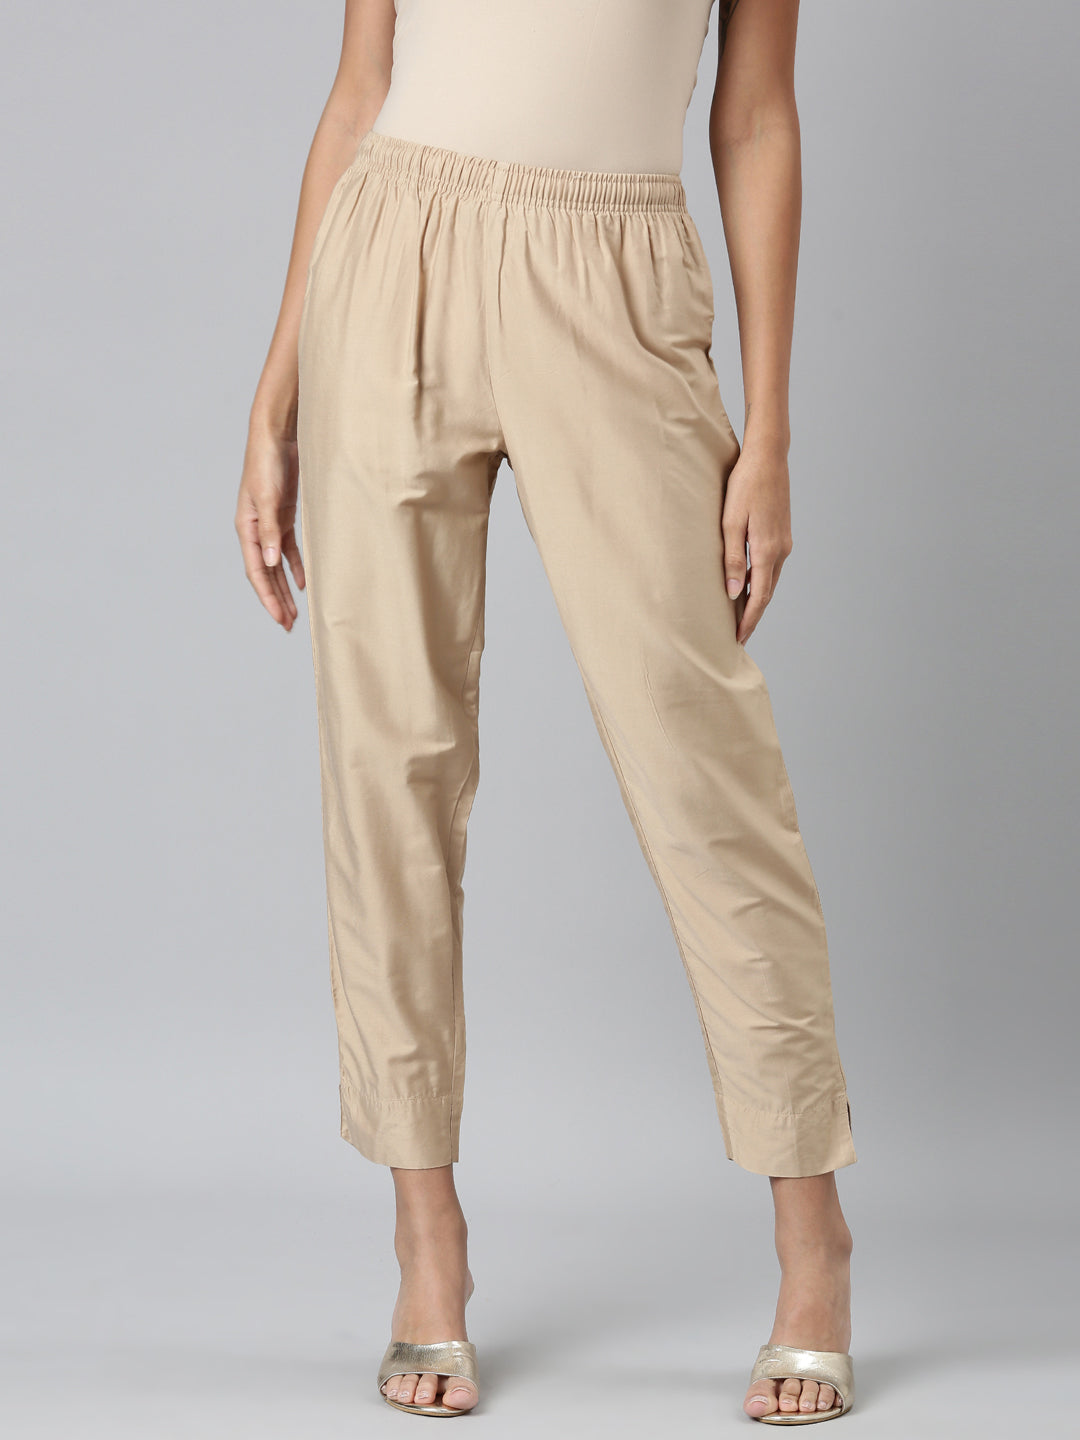 Women's Wrinkle-Free Bayside Pants, Ultra-High Rise Hidden Comfort Waist  Crop Straight-Leg | Pants & Jeans at L.L.Bean